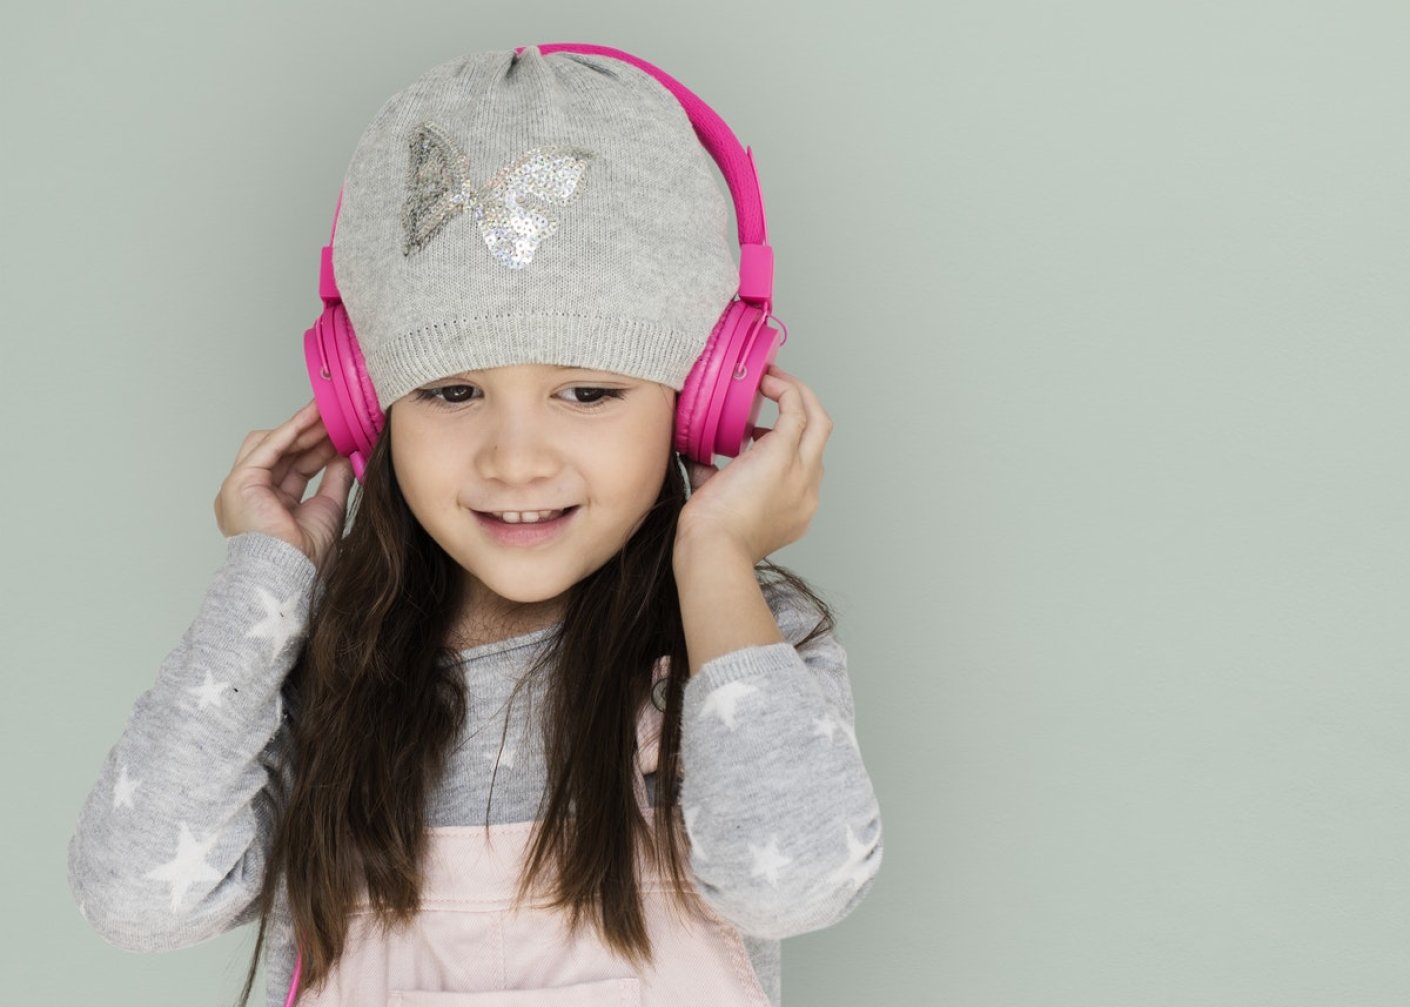 Glazba je velik poticaj za dječji razvoj